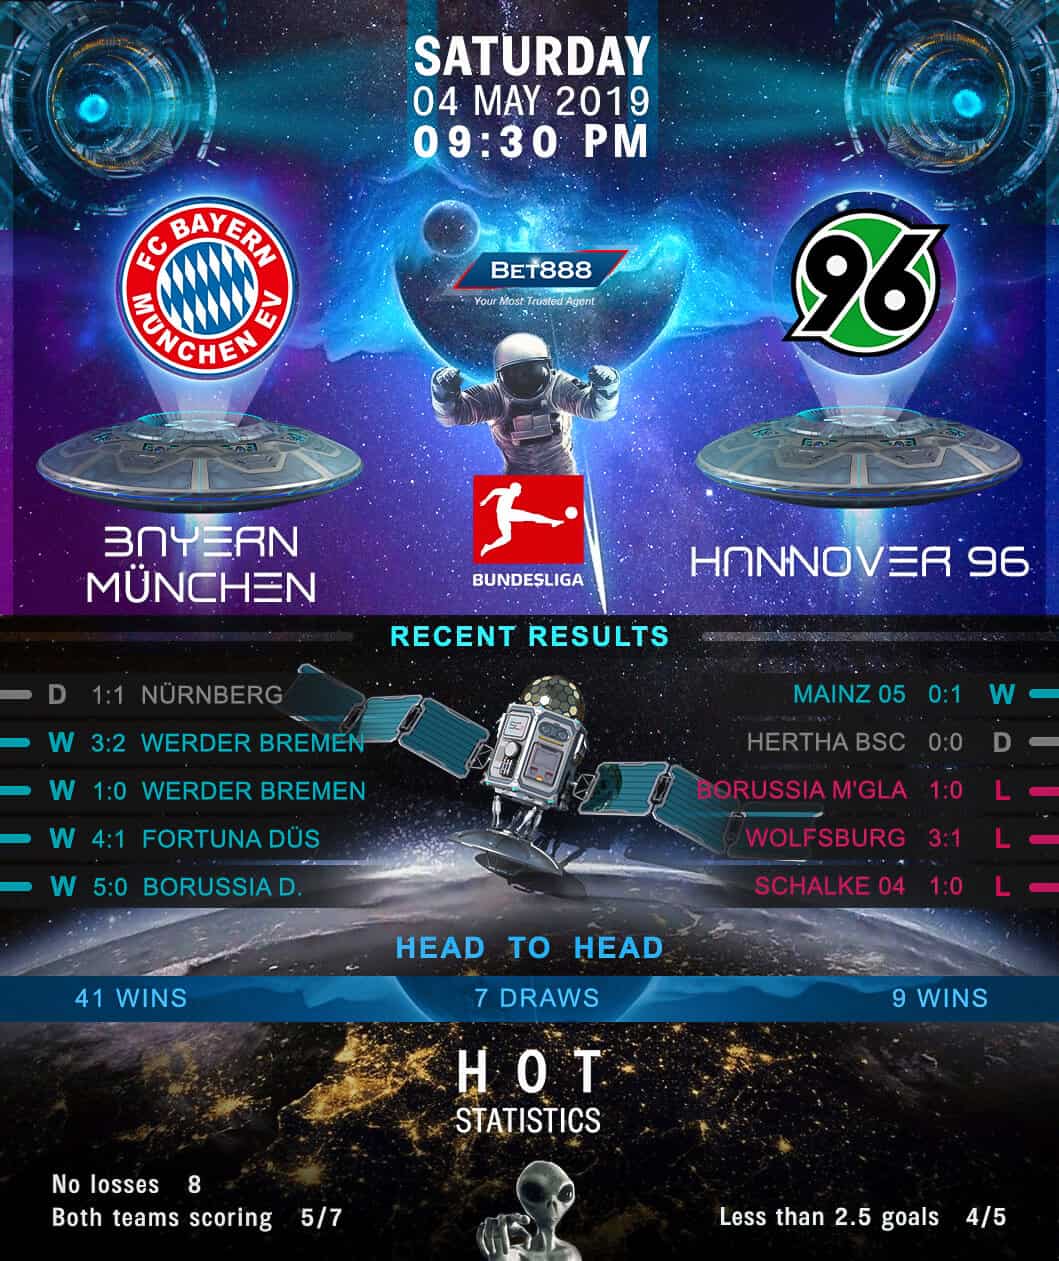 Bayern Munich vs Hannover 96 04/05/19